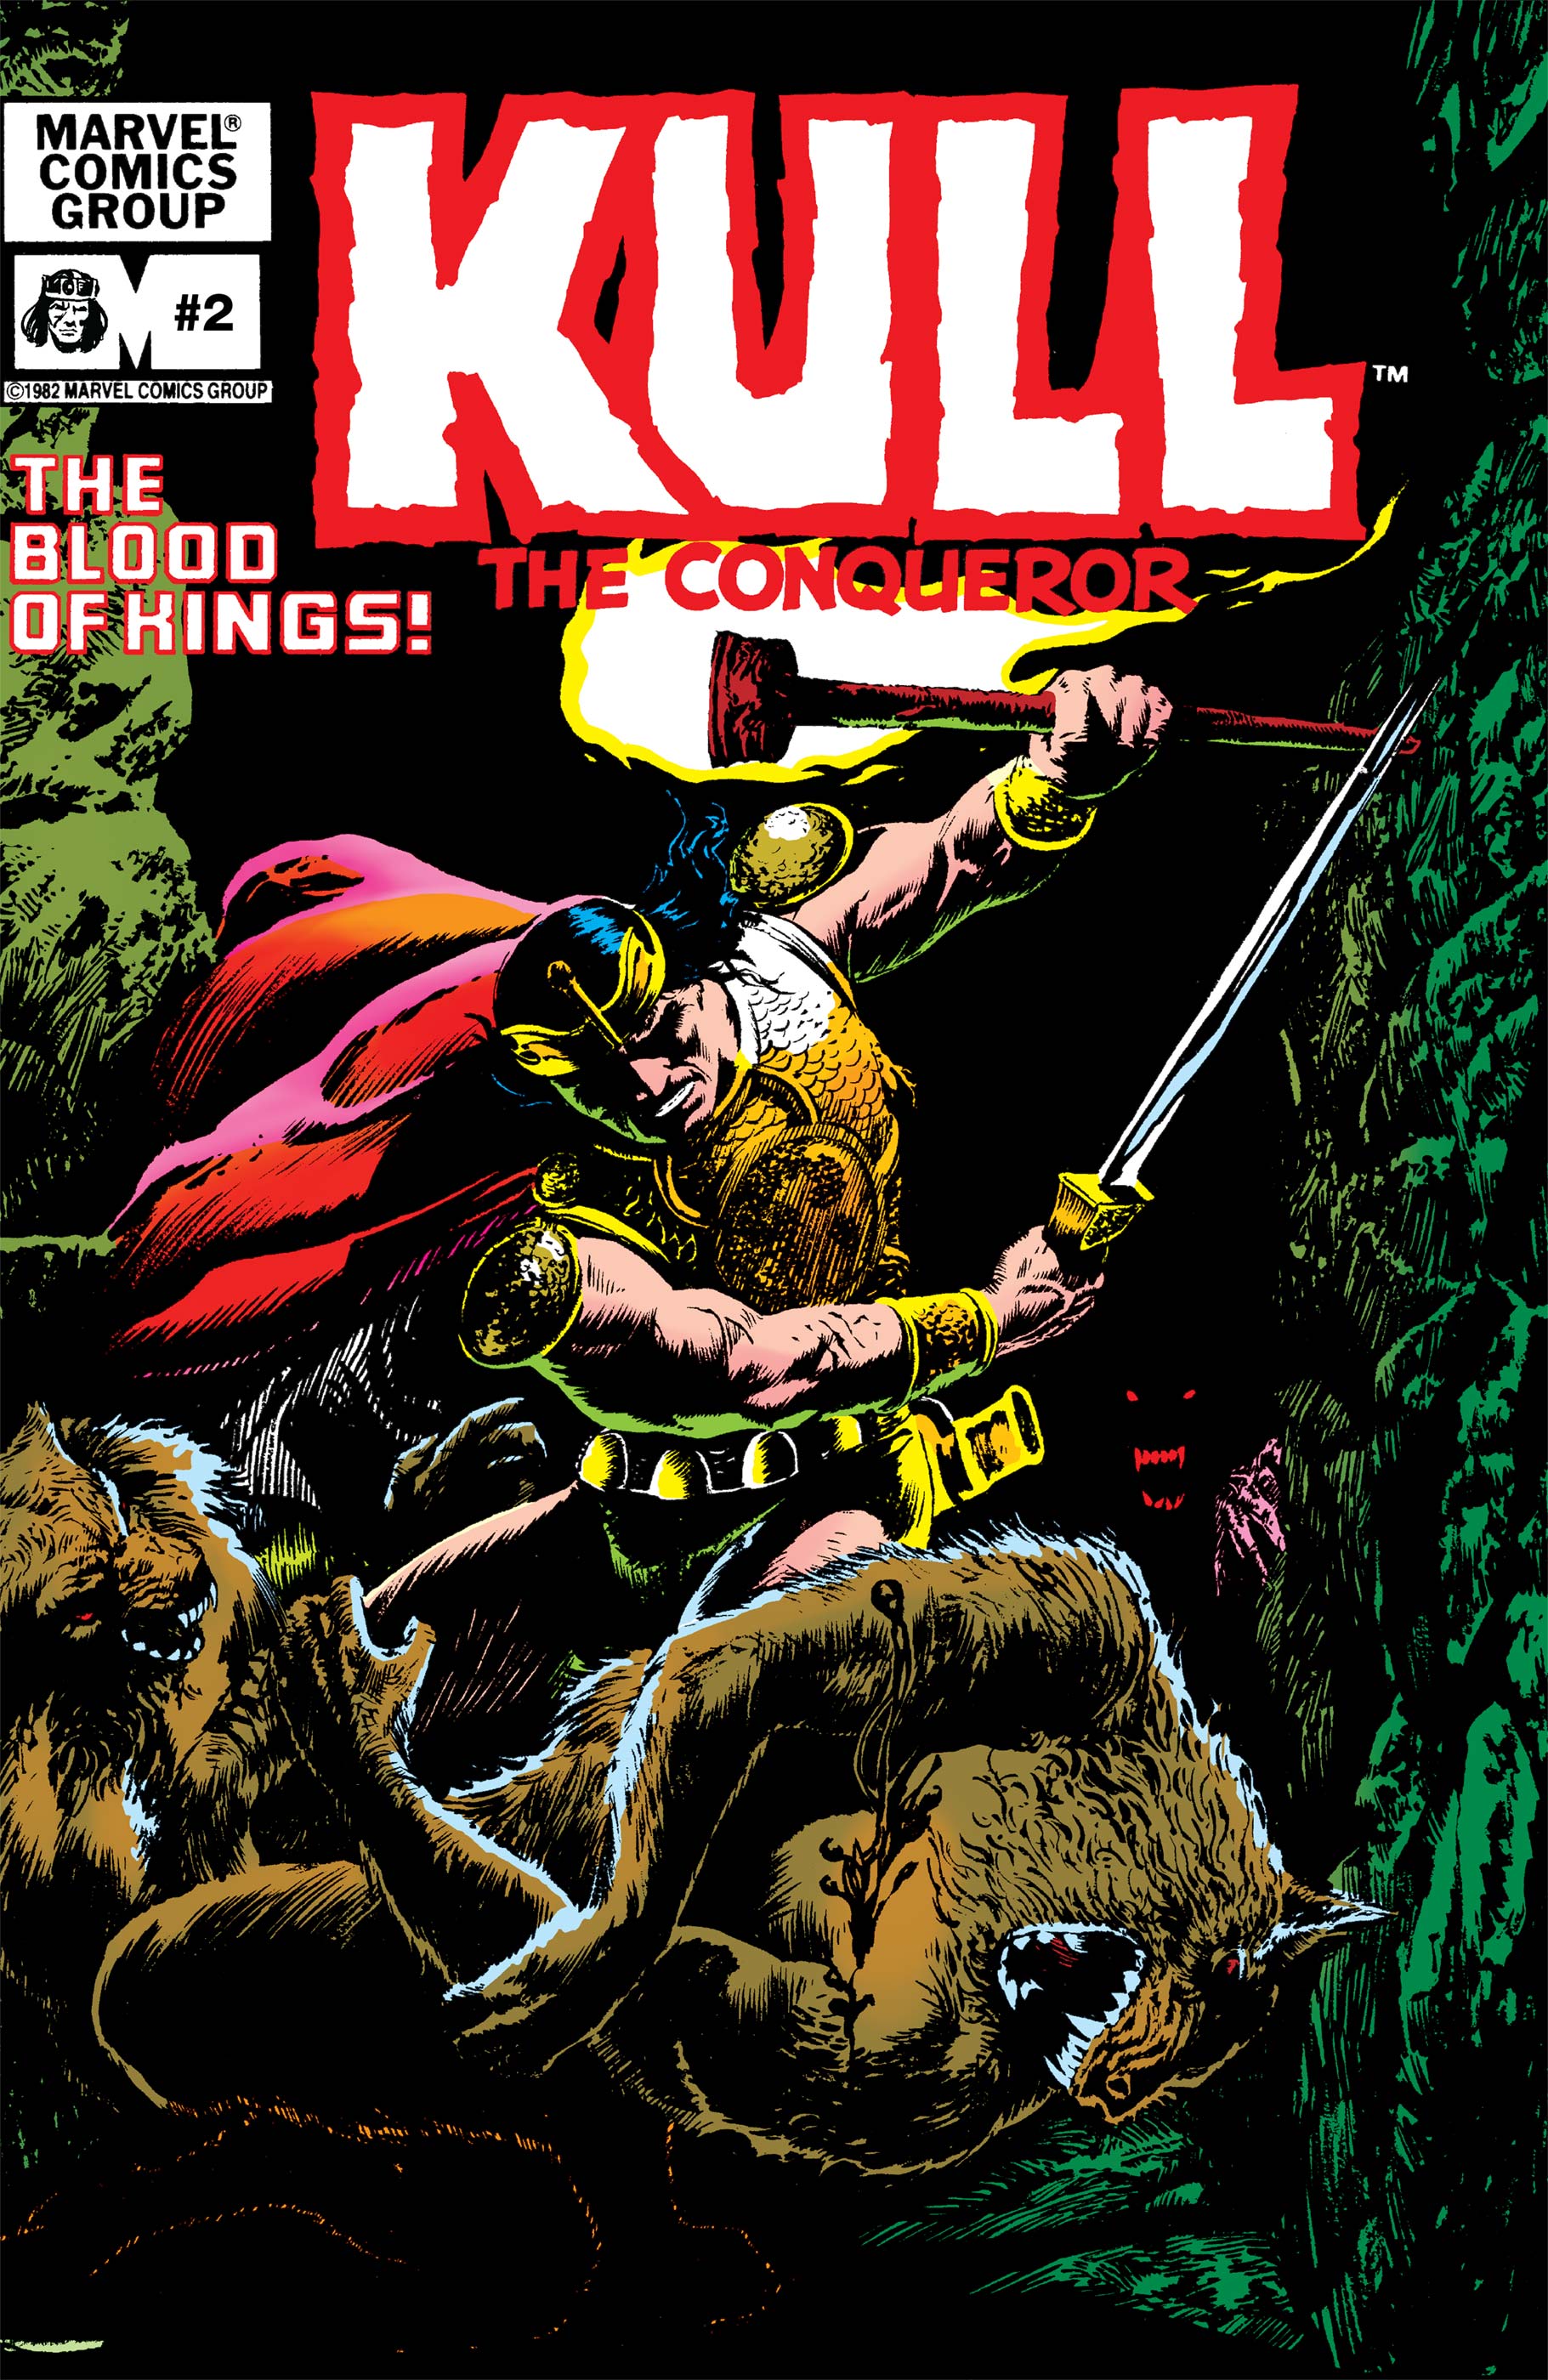 Kull the Conqueror (1982) #2